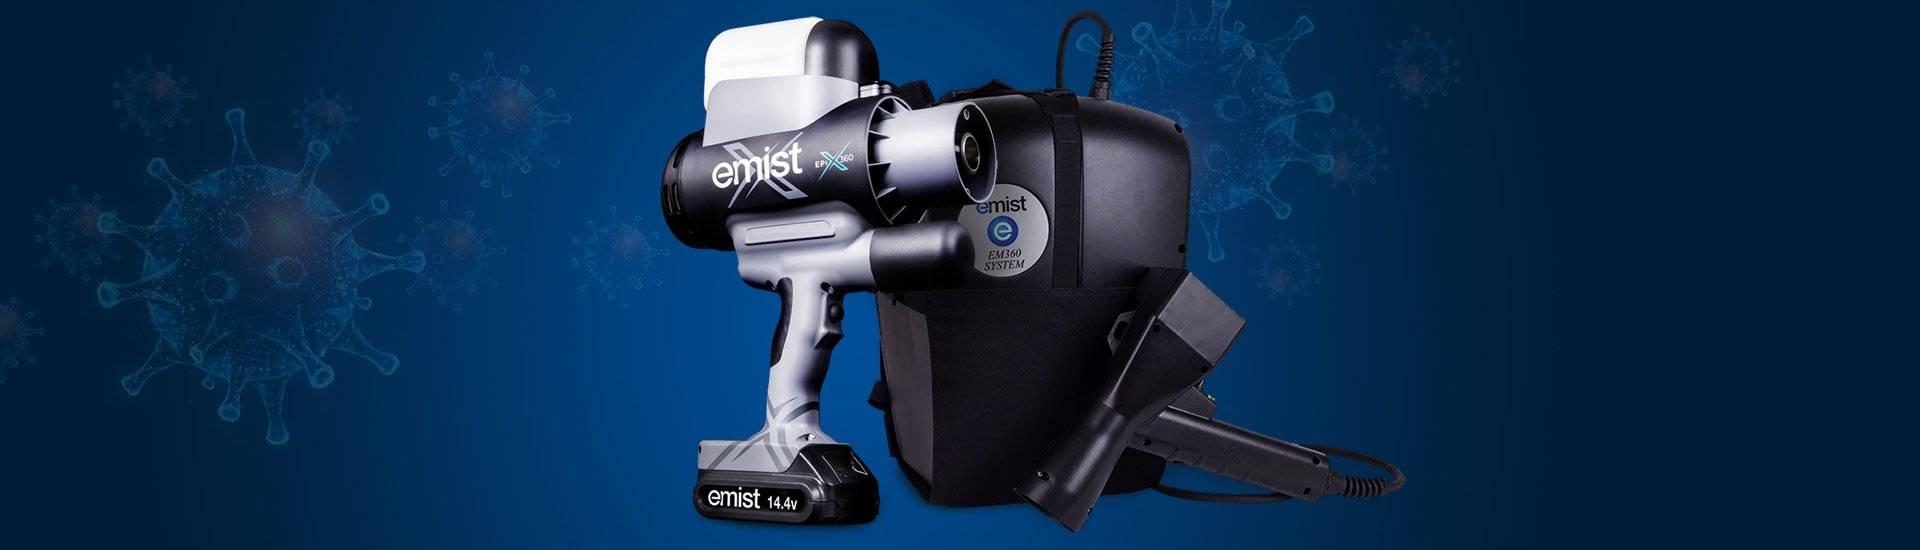 EMIST Canada - Cleanterra Authorized EMist Distributor - EPIX360 and EM360